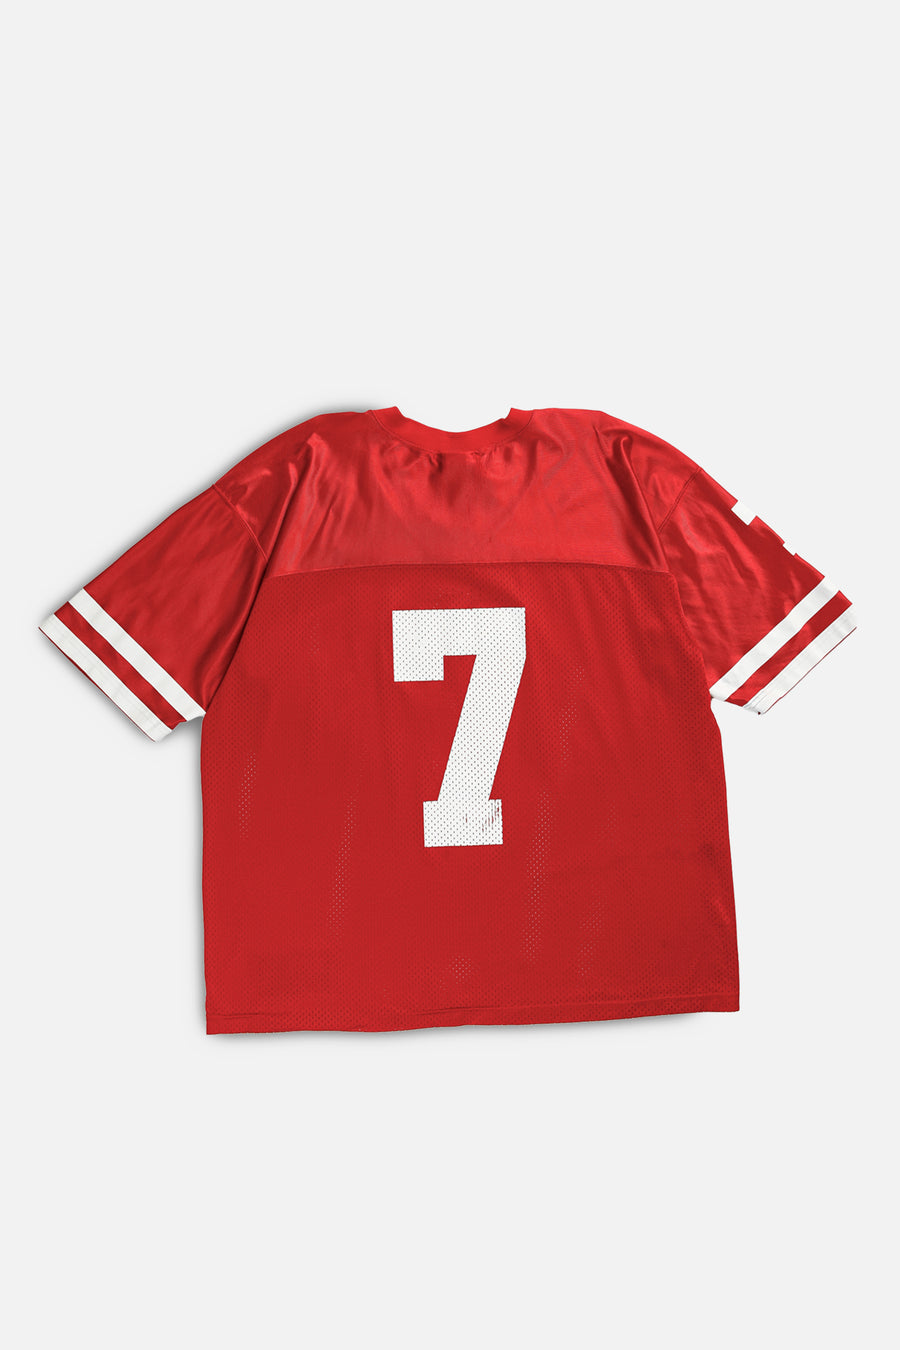 Vintage Nebraska Cornhuskers Football Jersey - XL